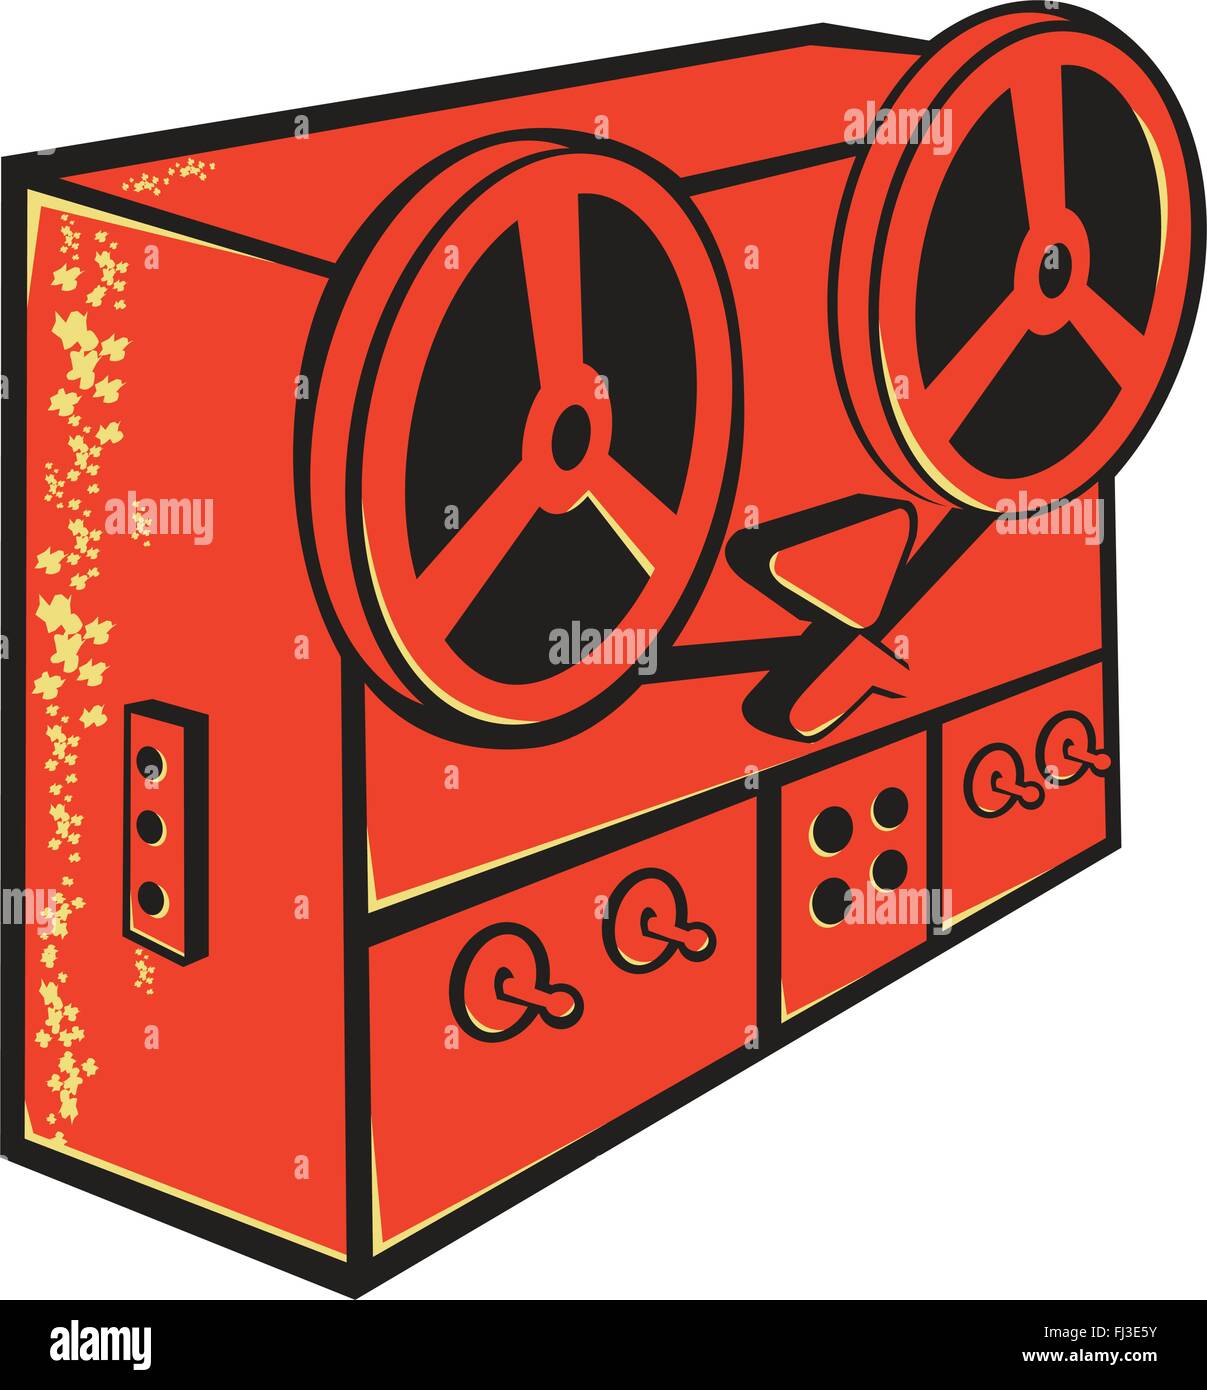 Vektor-Illustration eines Tape-Recorder, Tape-Deck, Reel Tape-Deck, Kassettendeck oder Bandmaschine getan im retro-Stil auf Stock Vektor